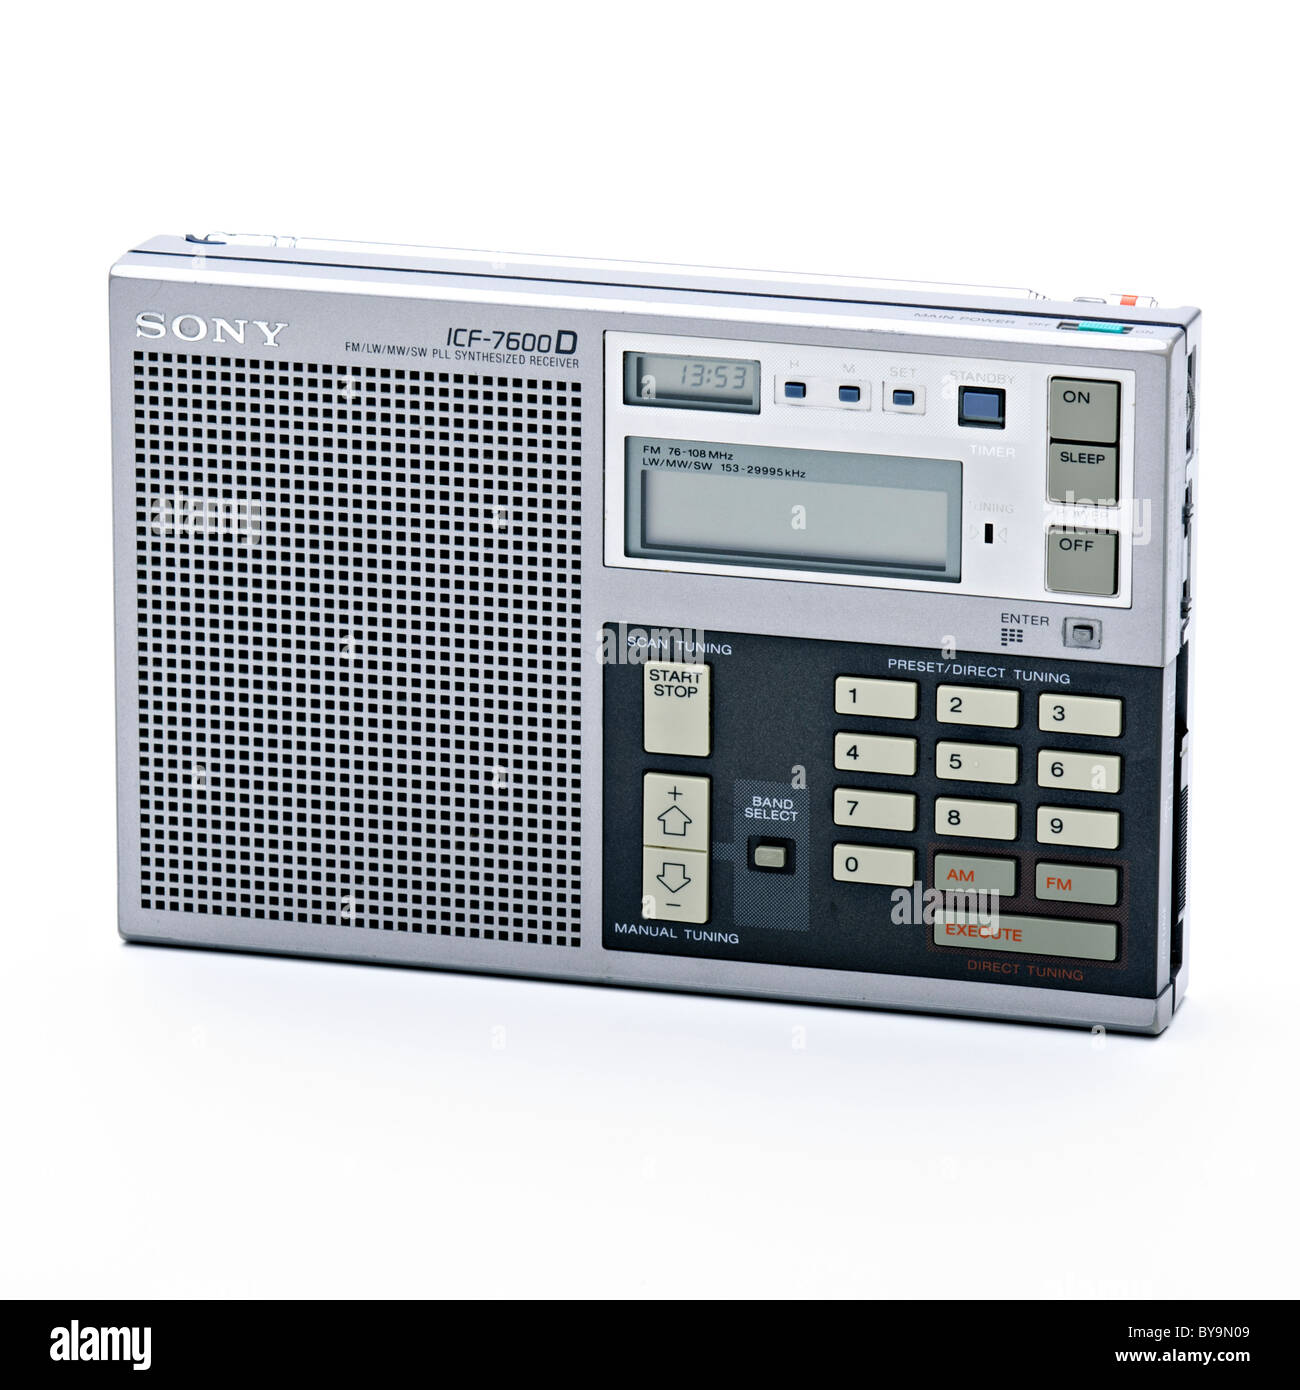 1984 1987 radio Sony ICF-7600D Stock Photo - Alamy